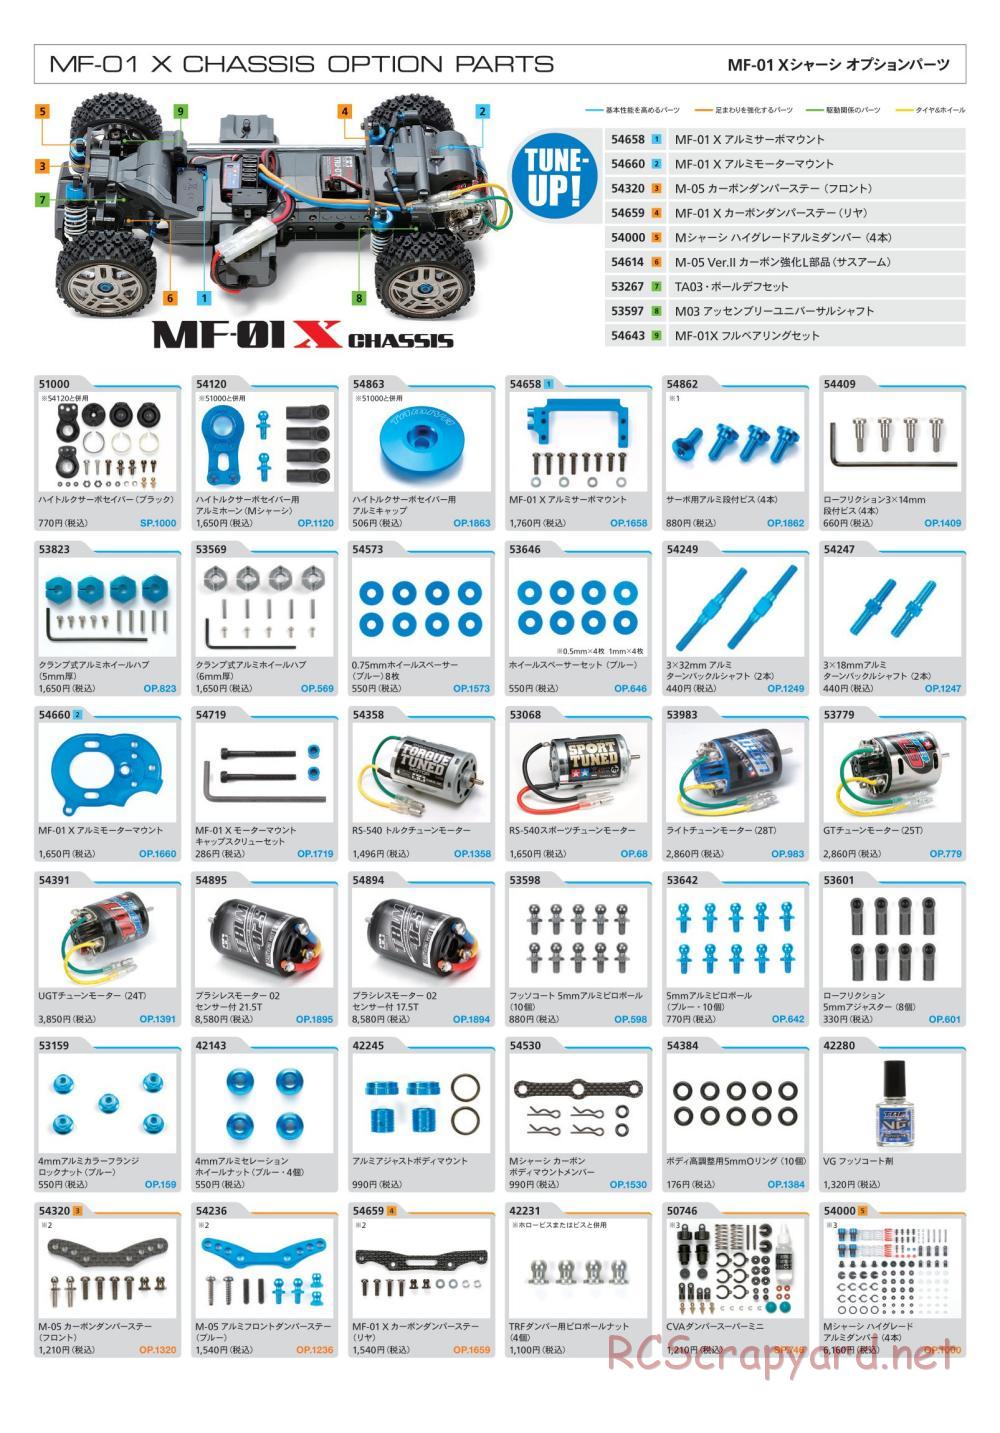 Tamiya - MF-01X Chassis - Option Parts - Page 1